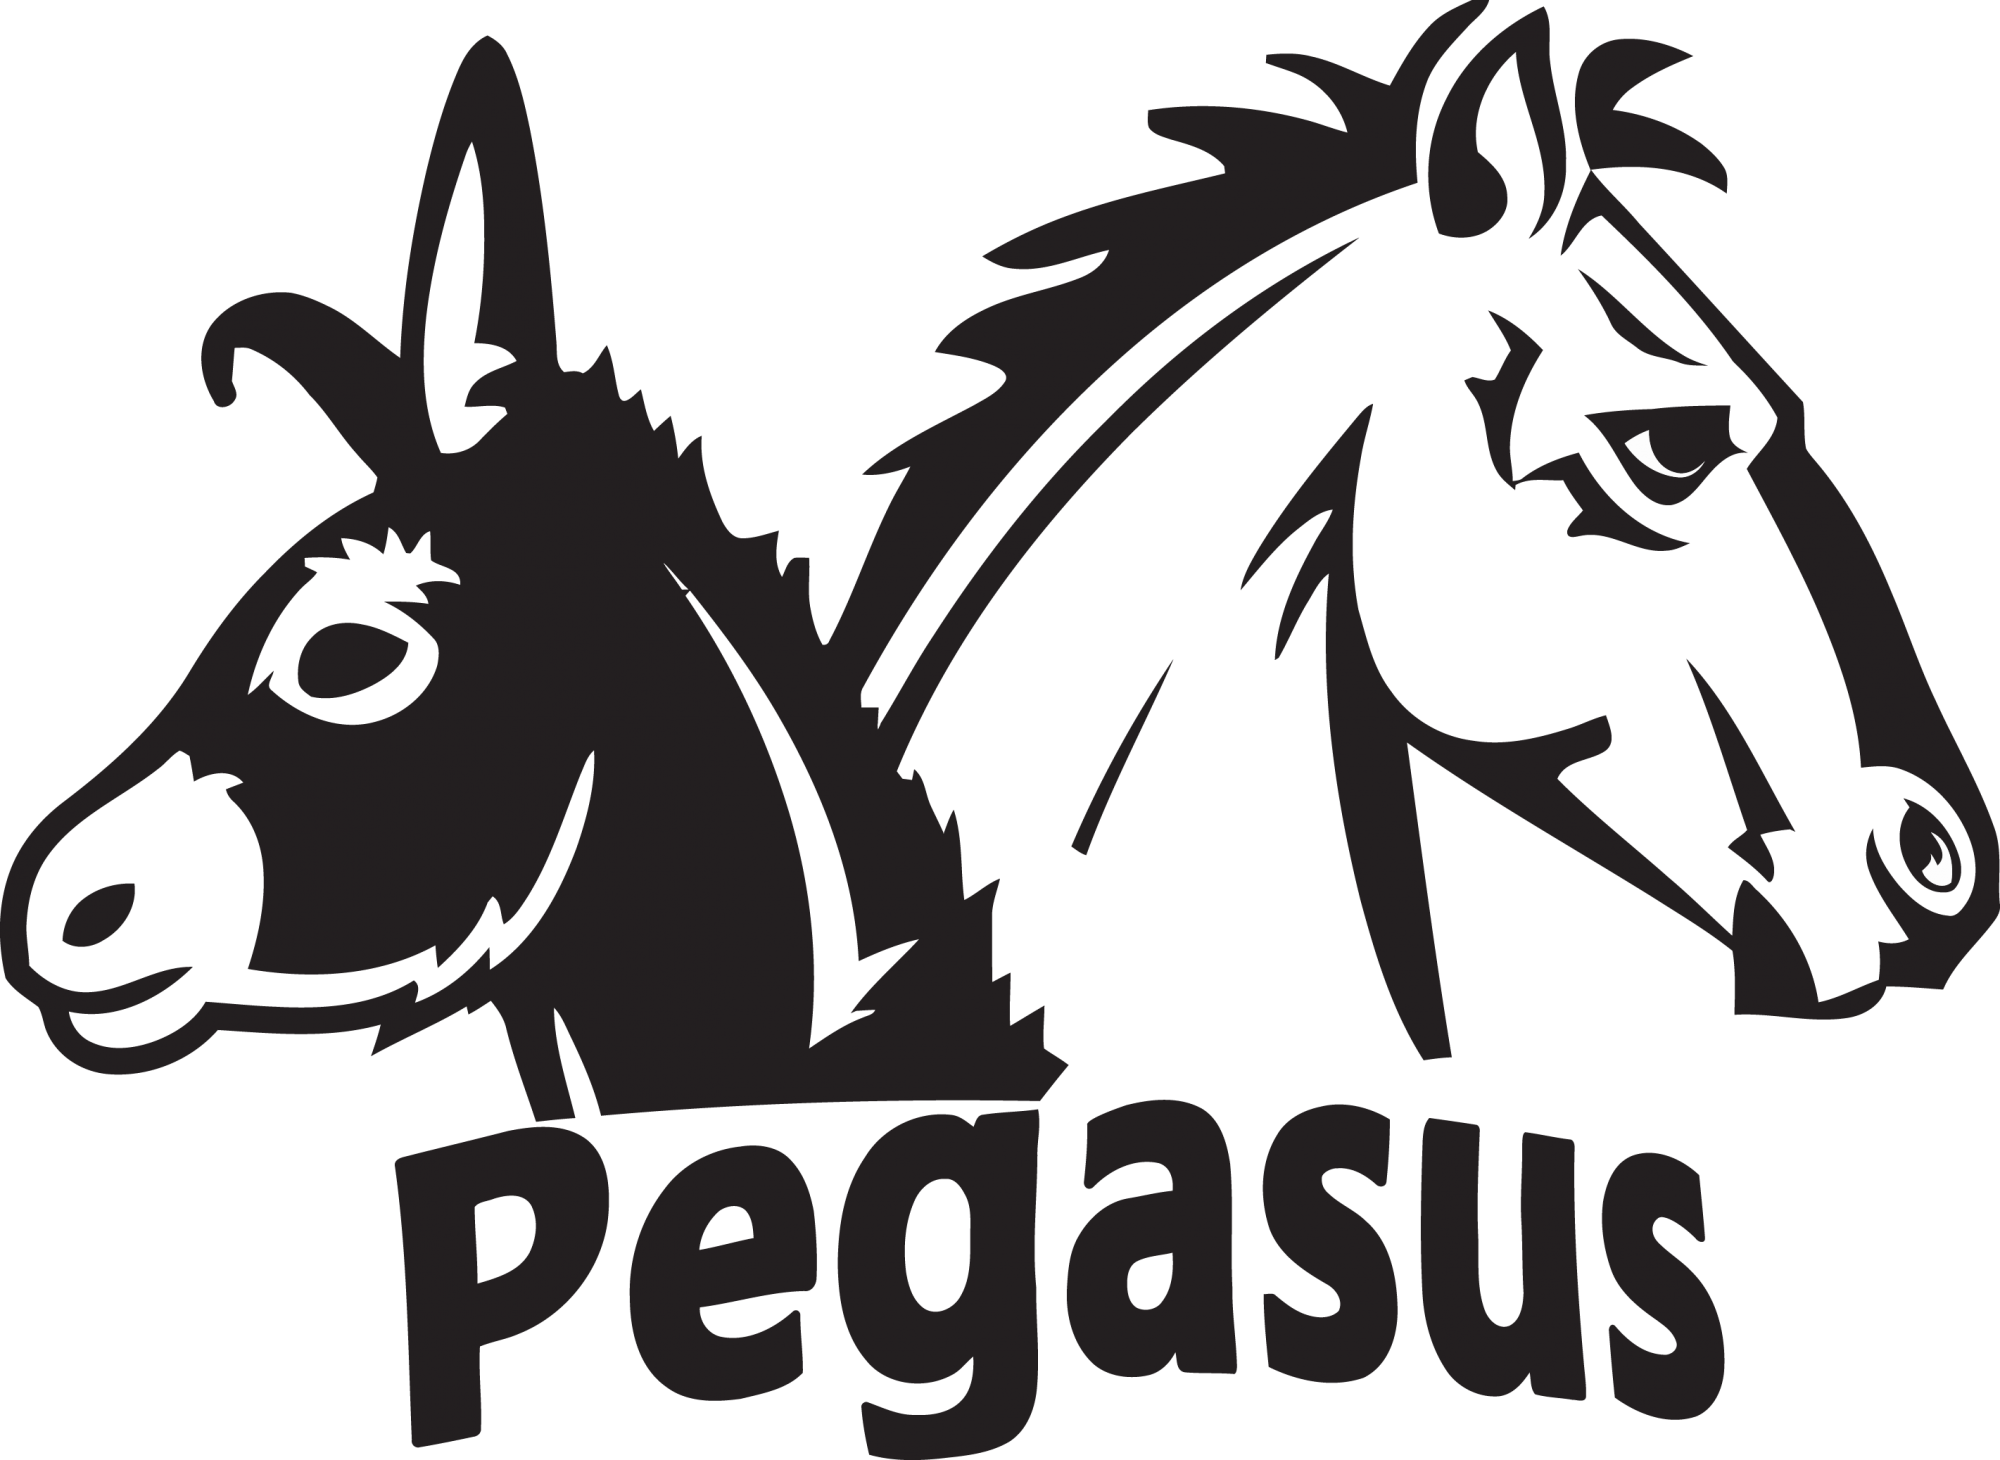 Pegasus Society